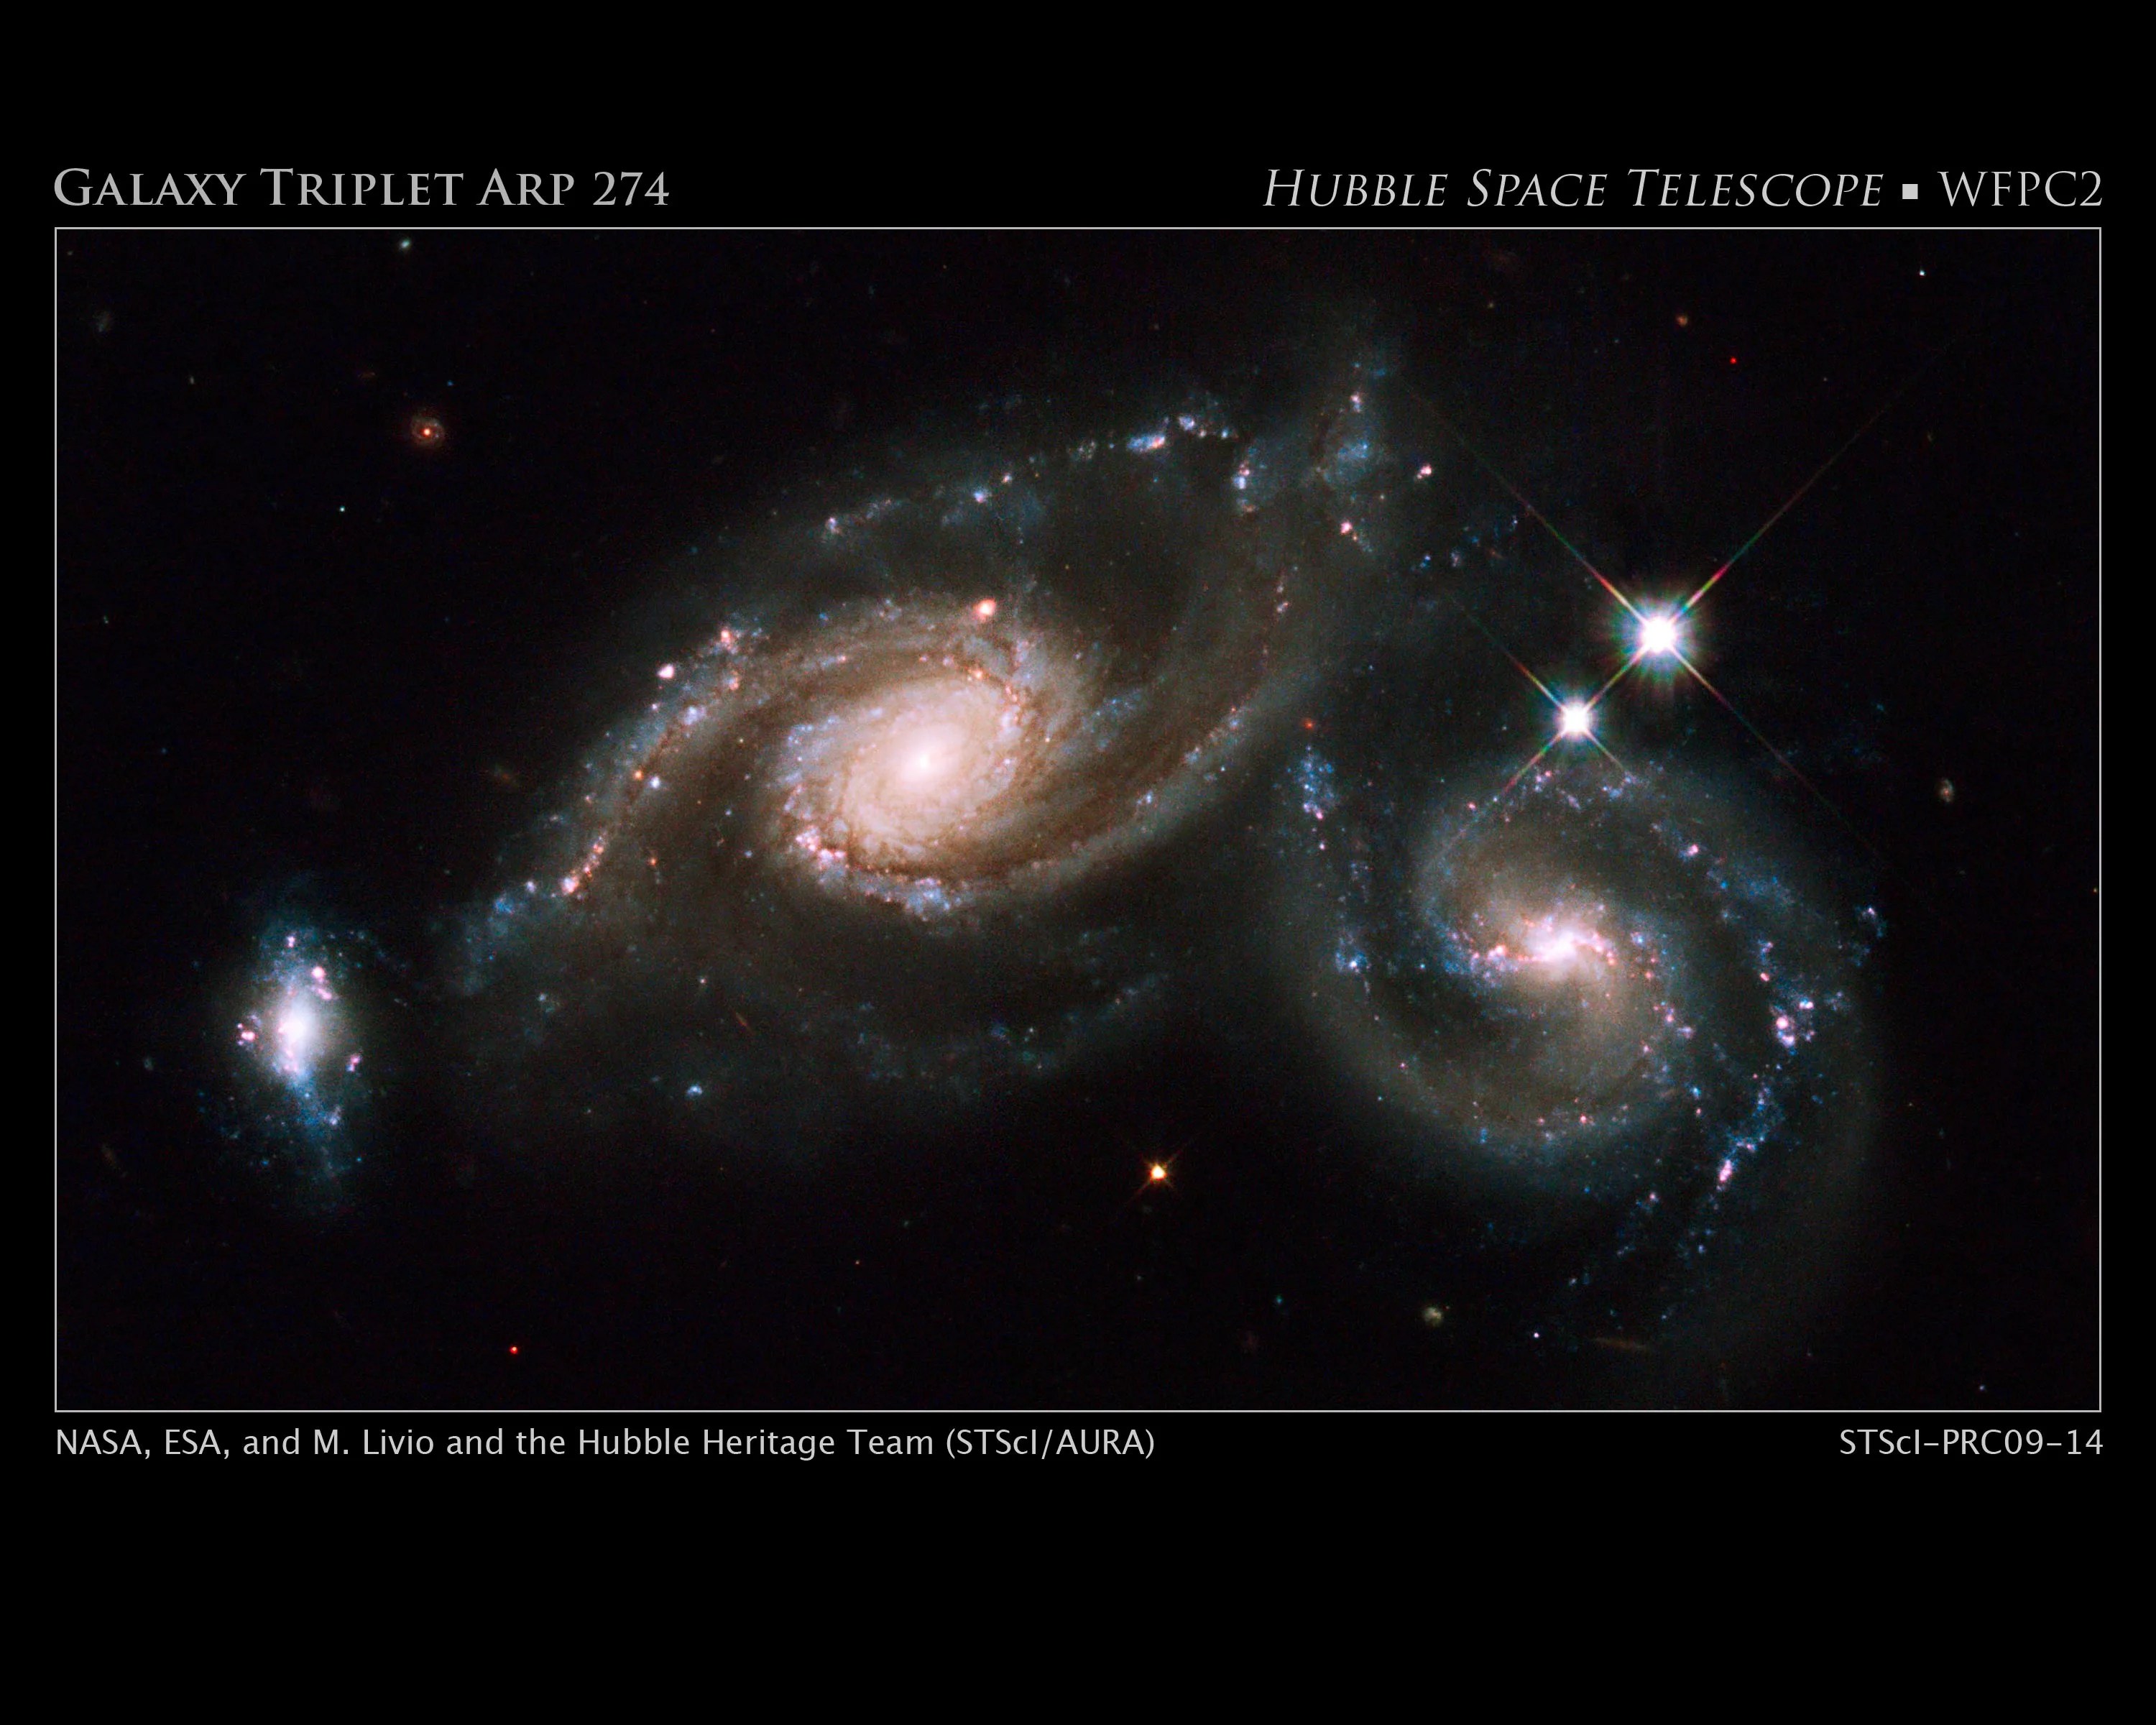 Hubble image of ARP 274 triplet galaxies